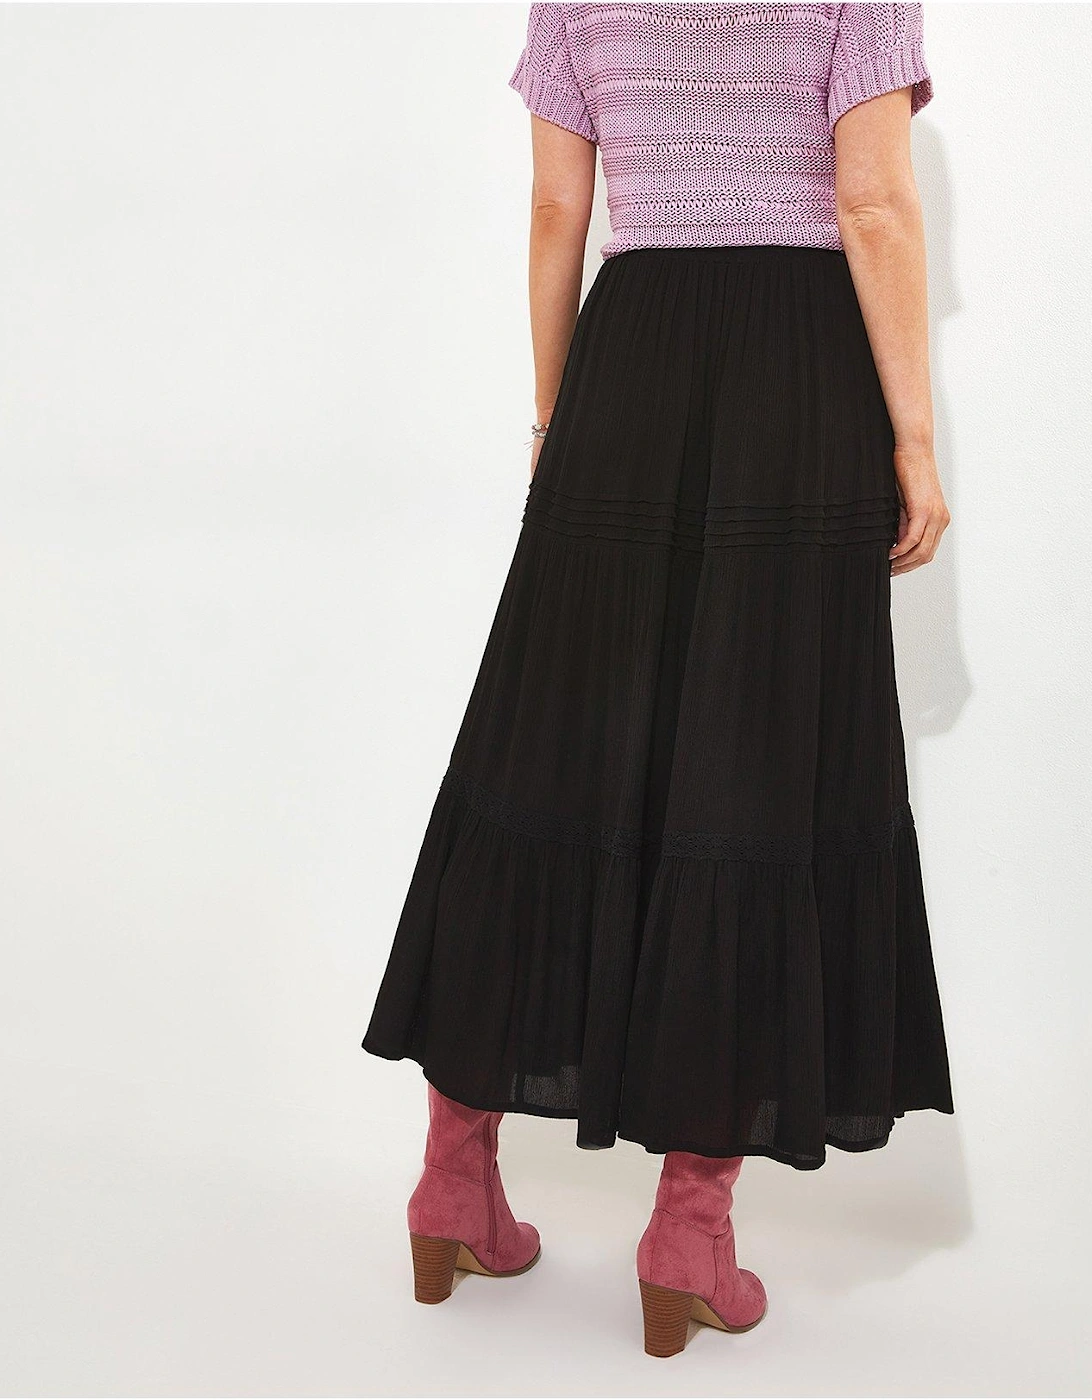 Tiered Maxi Skirt - Black